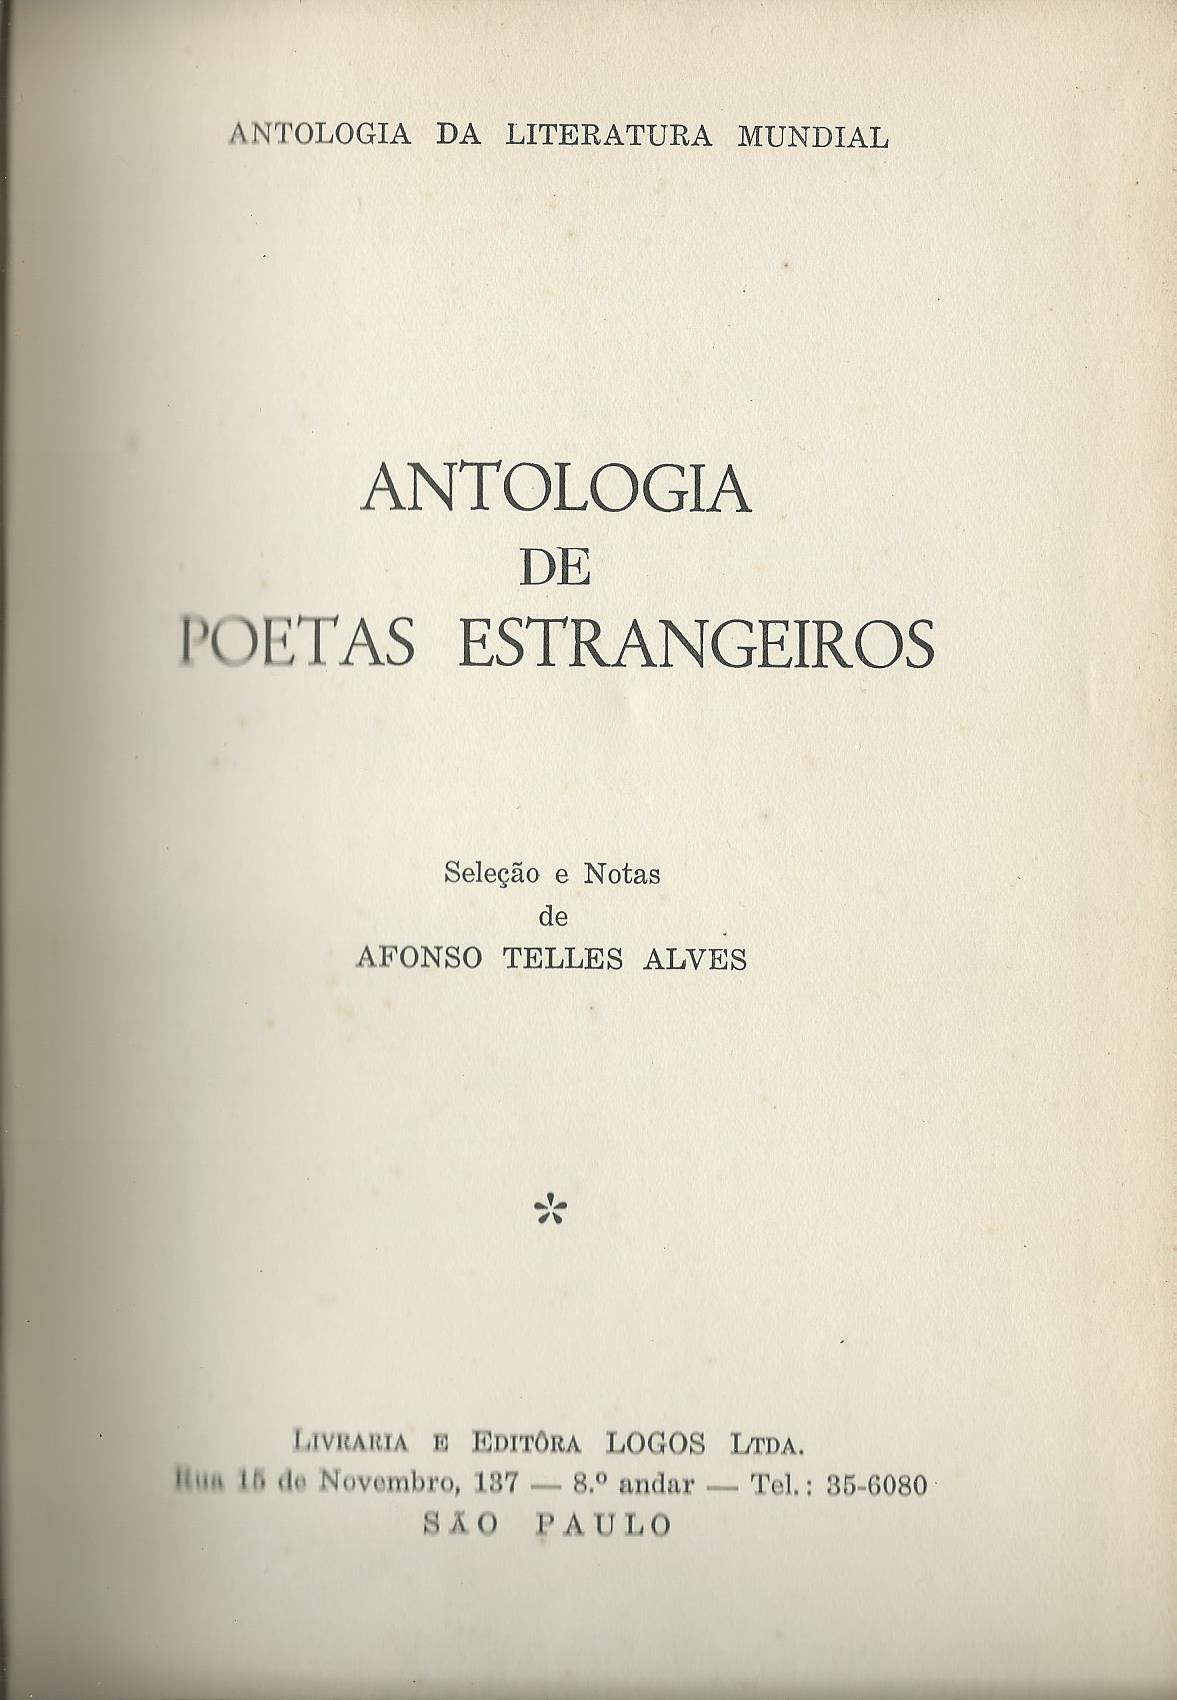 https://www.literaturabrasileira.ufsc.br/_images/obras/antologia_de_poetas_estrangeiros.jpg